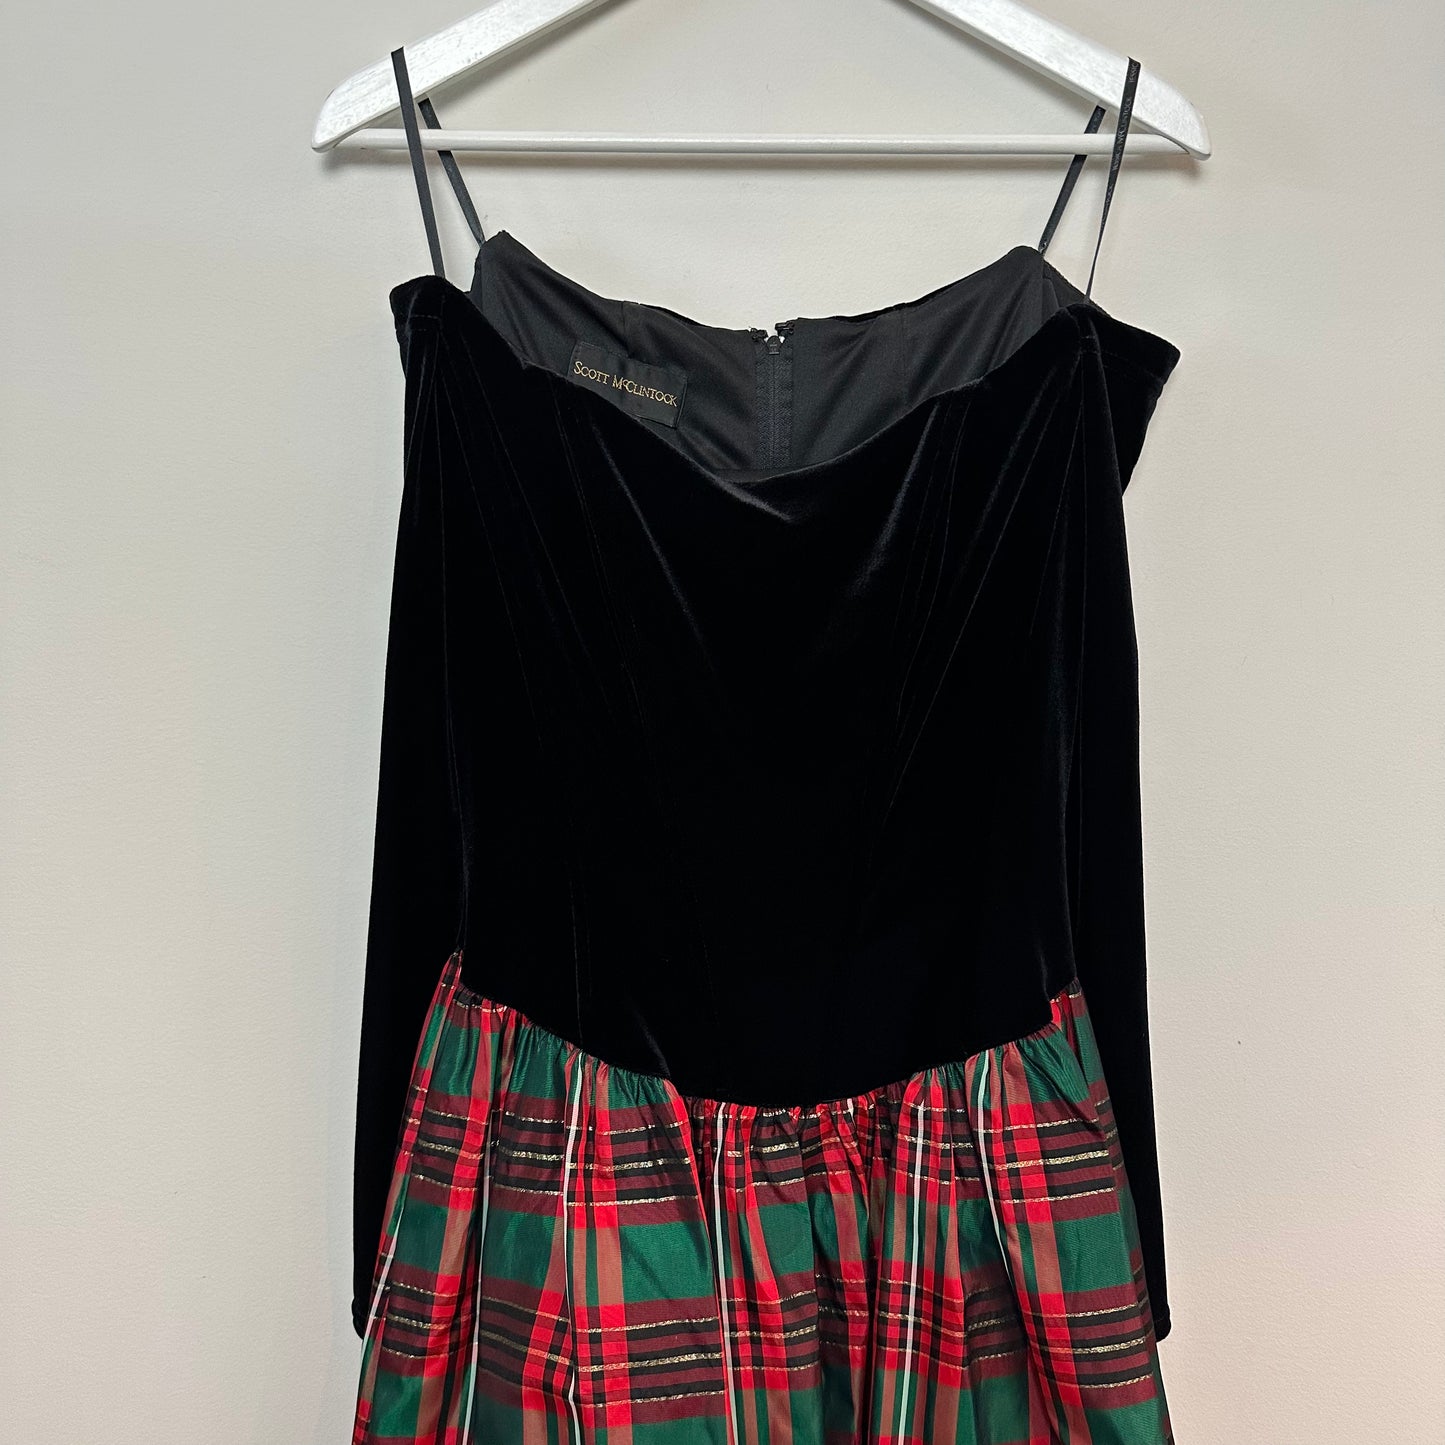 Vintage 80s Scott McClintock Tartan Red Plaid Ball Gown Off the Shoulder Dress Velvet 8